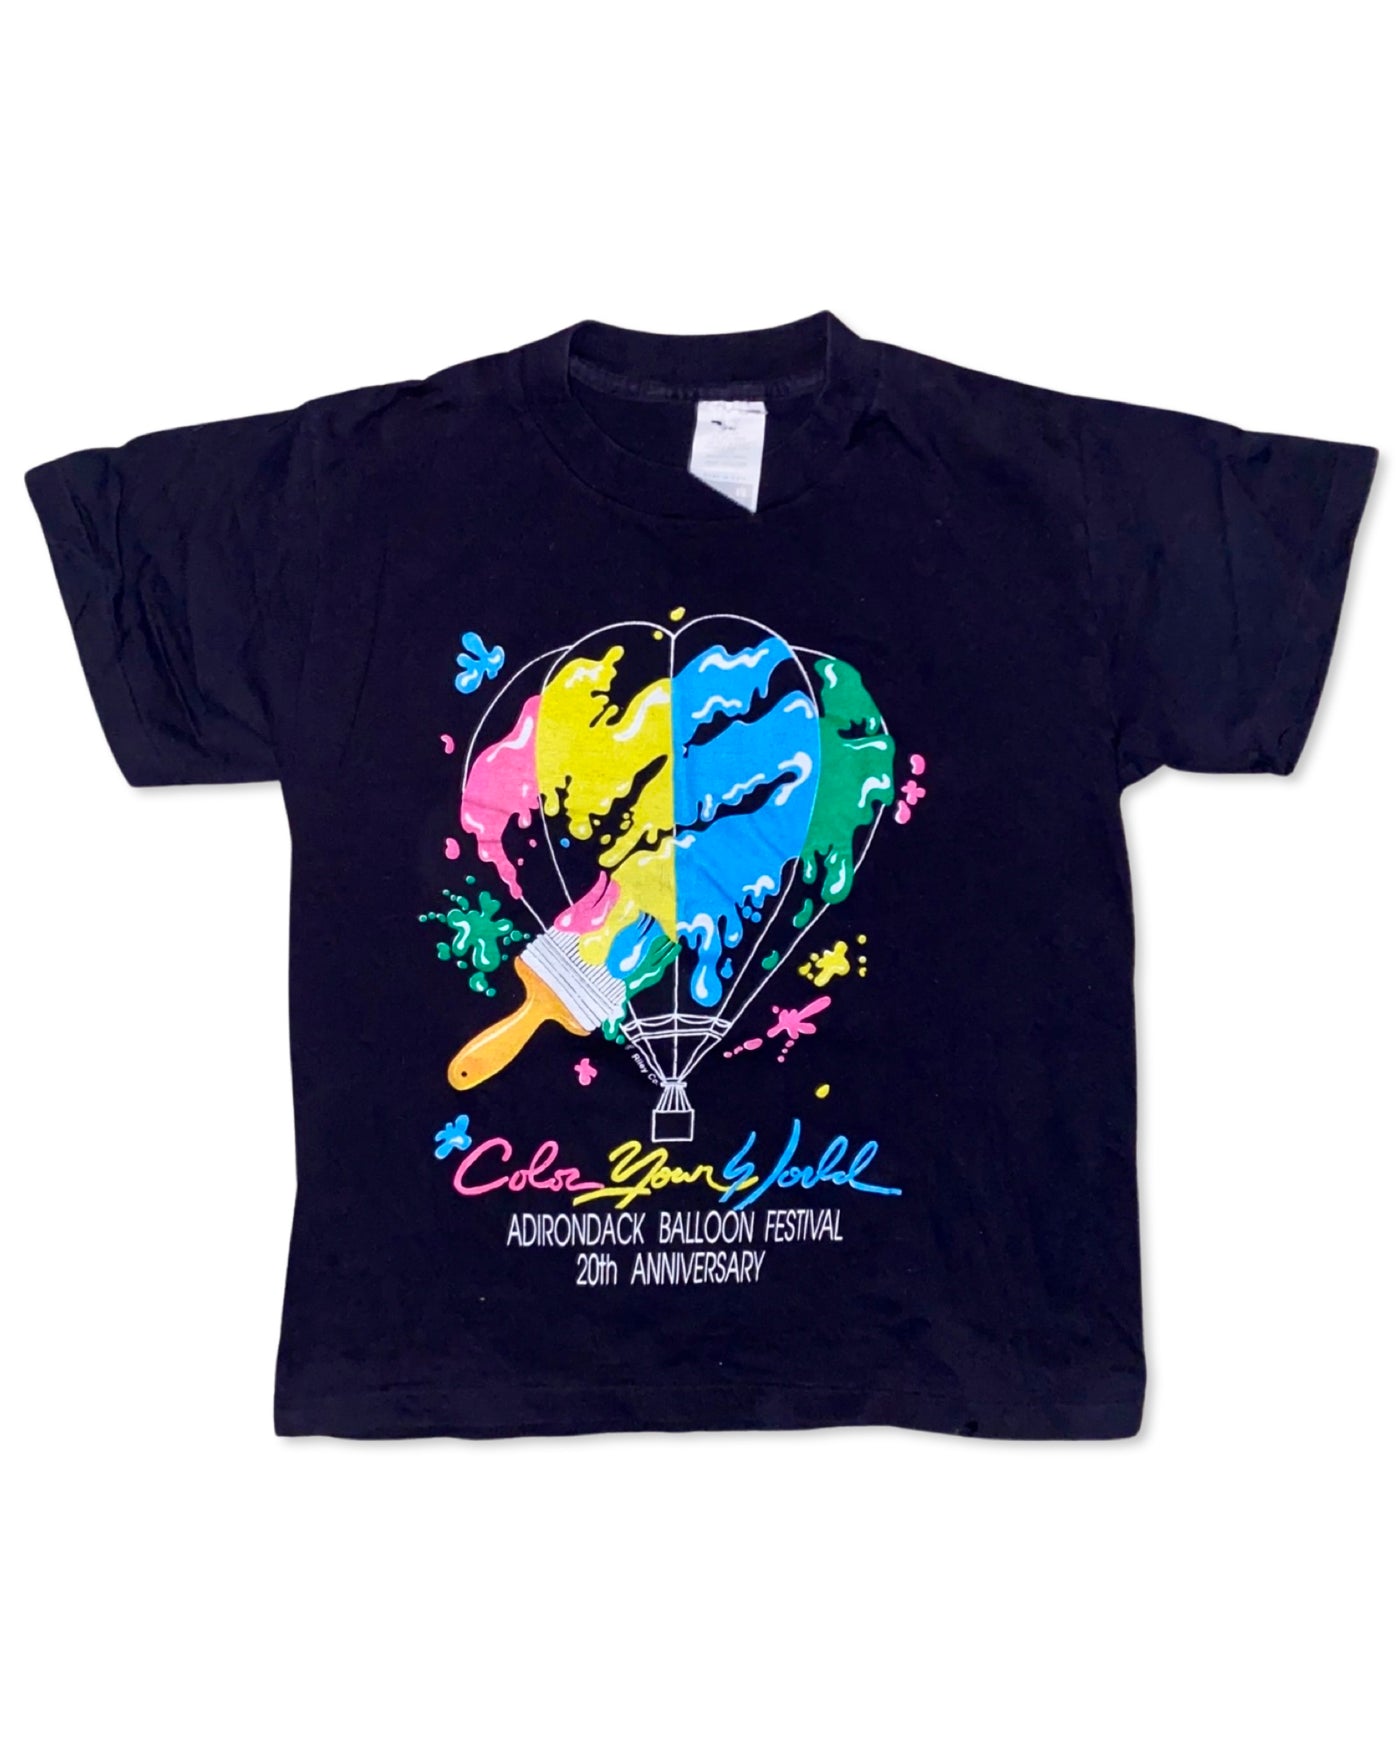 Vintage 1993 Adirondack Balloon Festival T-Shirt